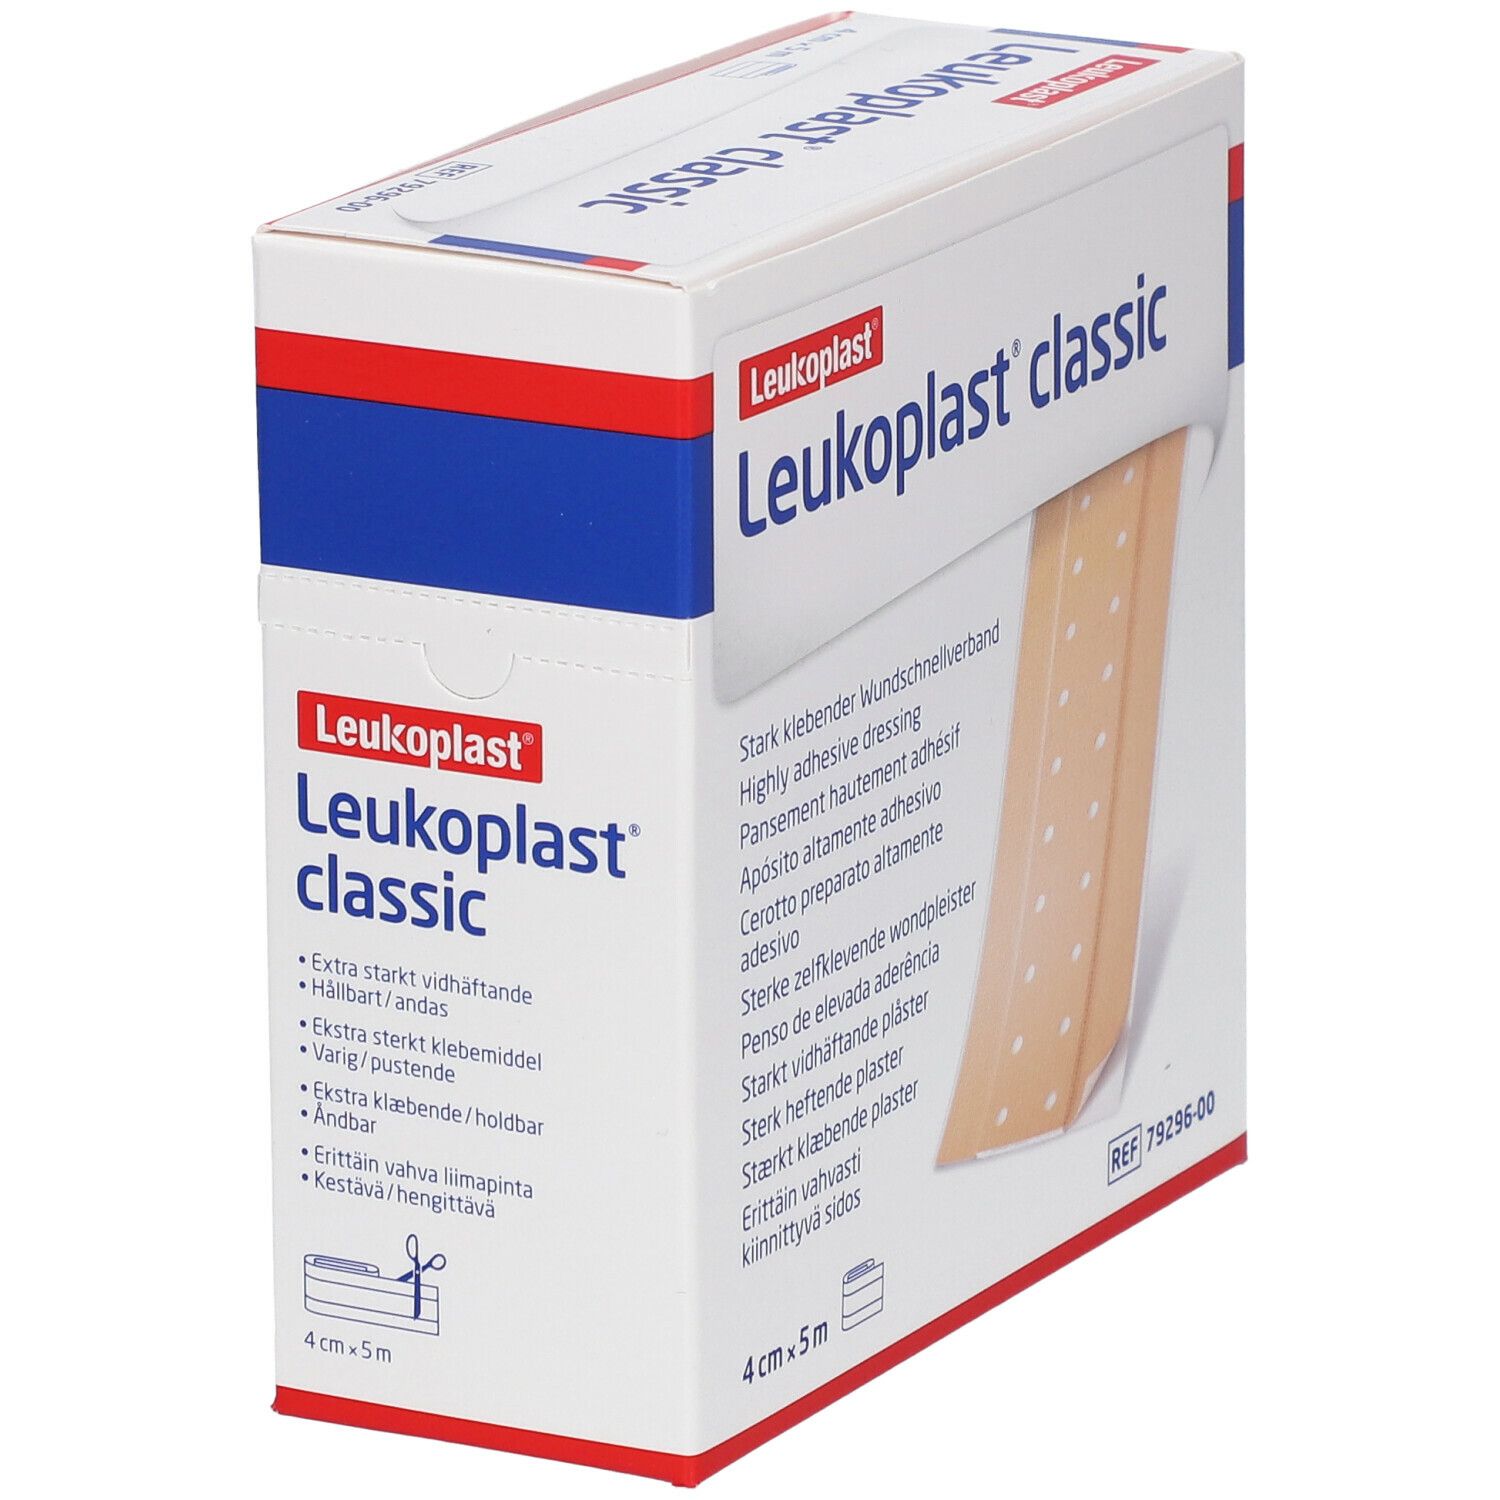 Leukoplast® Classic Pflaster 4 cm x 5 m Rolle